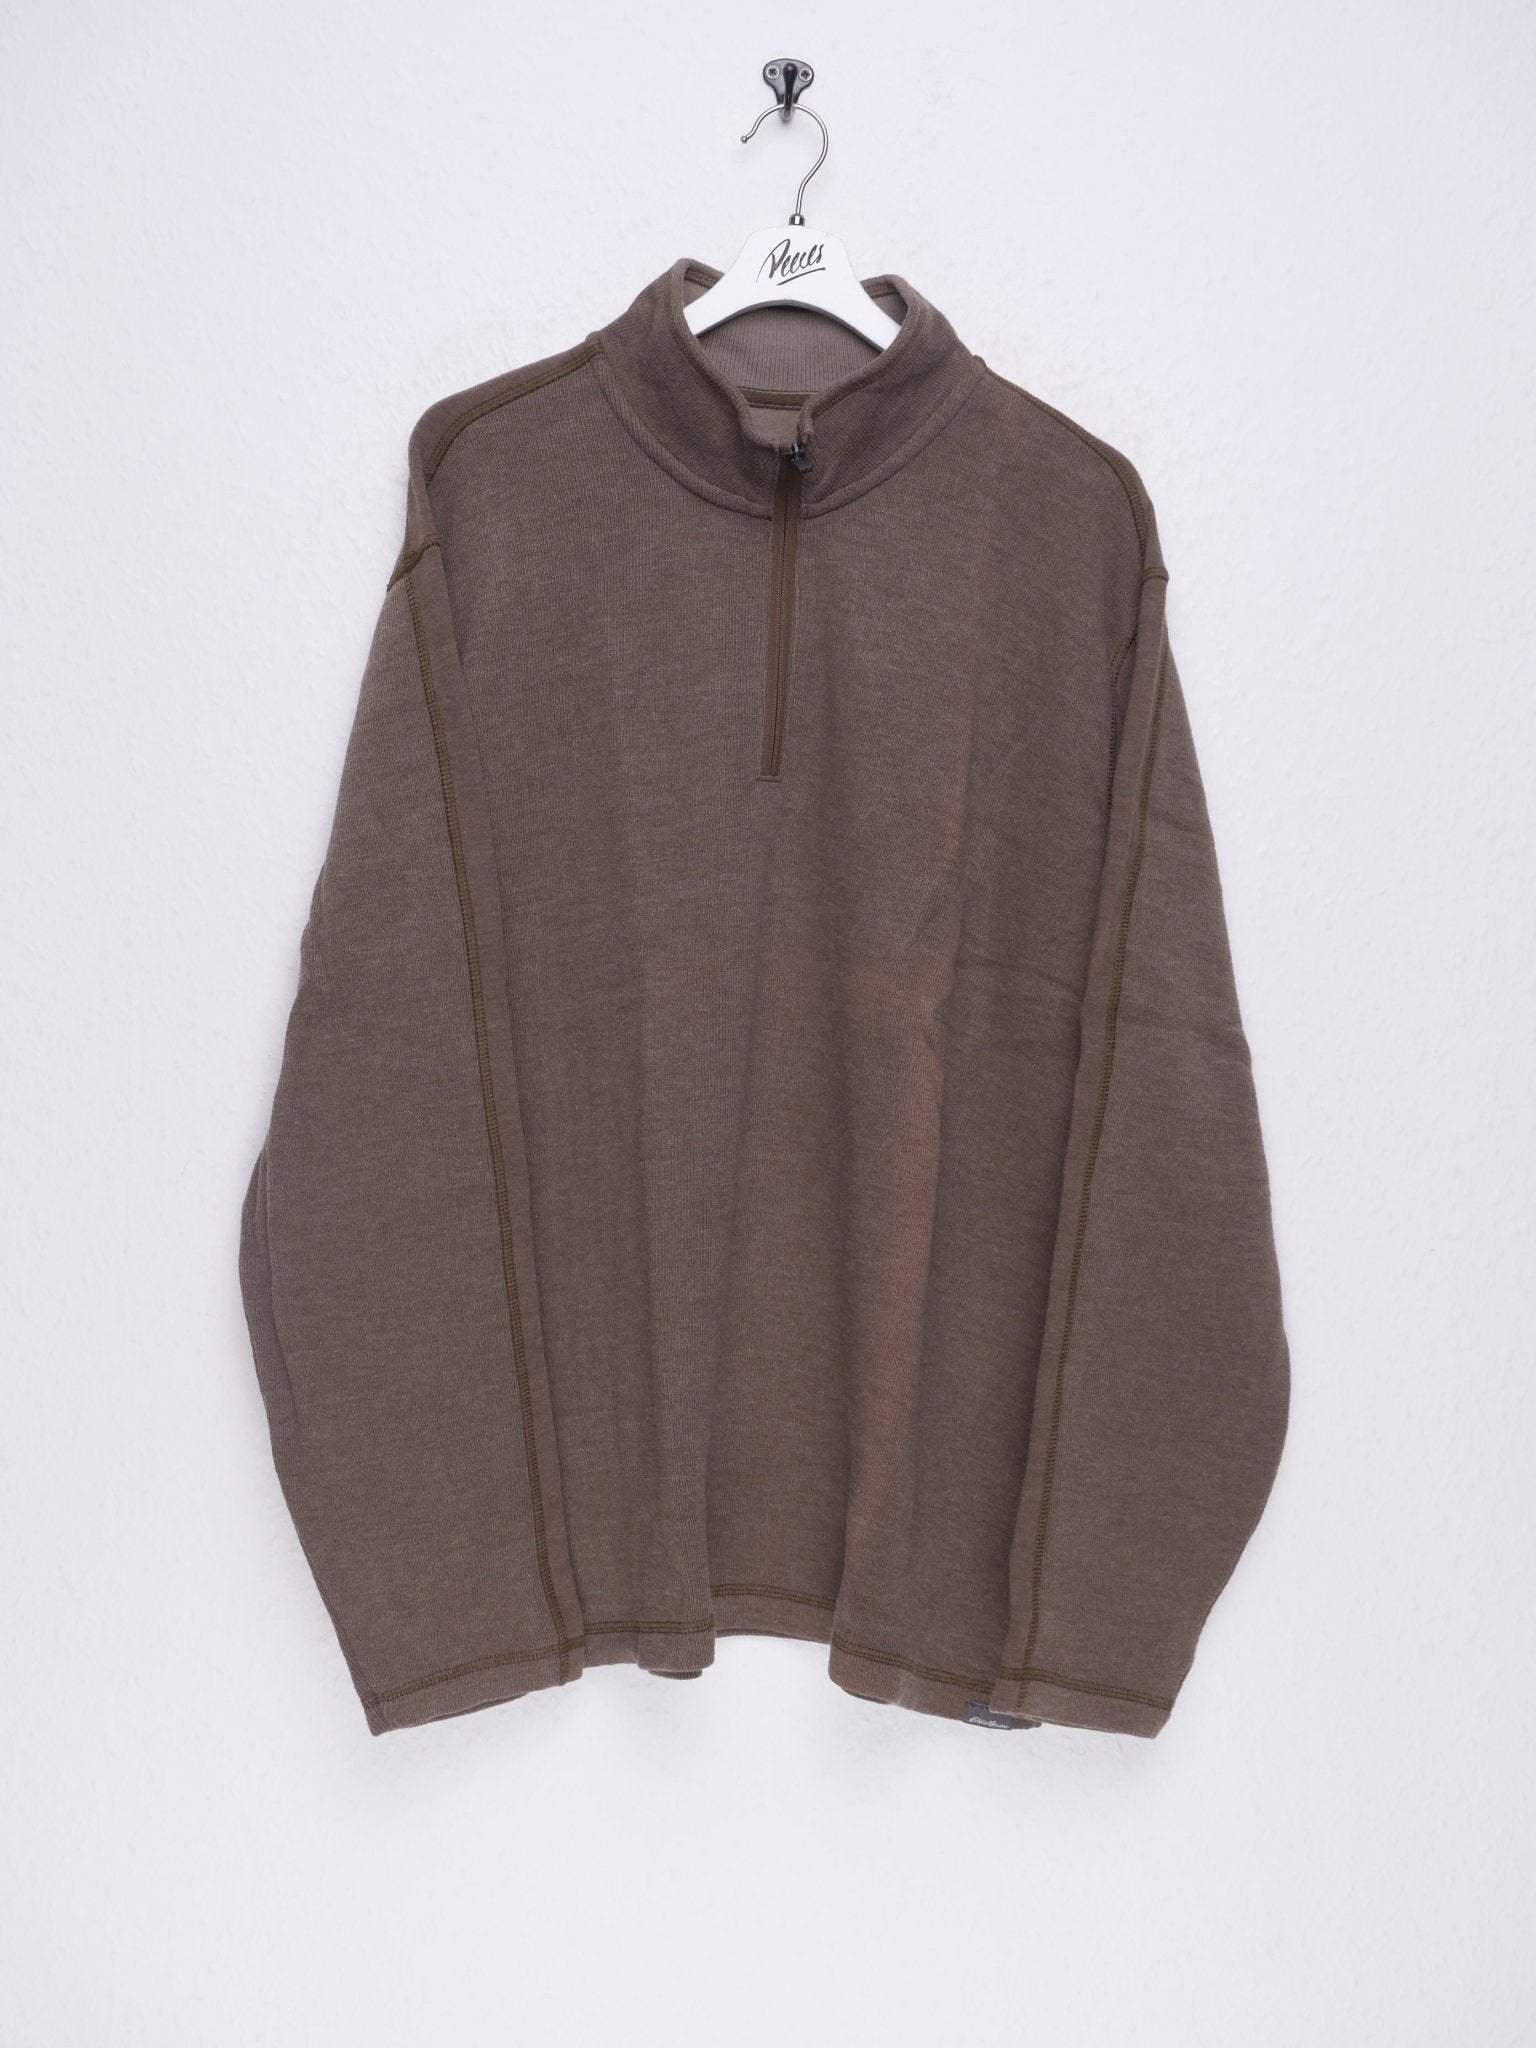 Plain brown Vintage Half Zip Sweater - Peeces